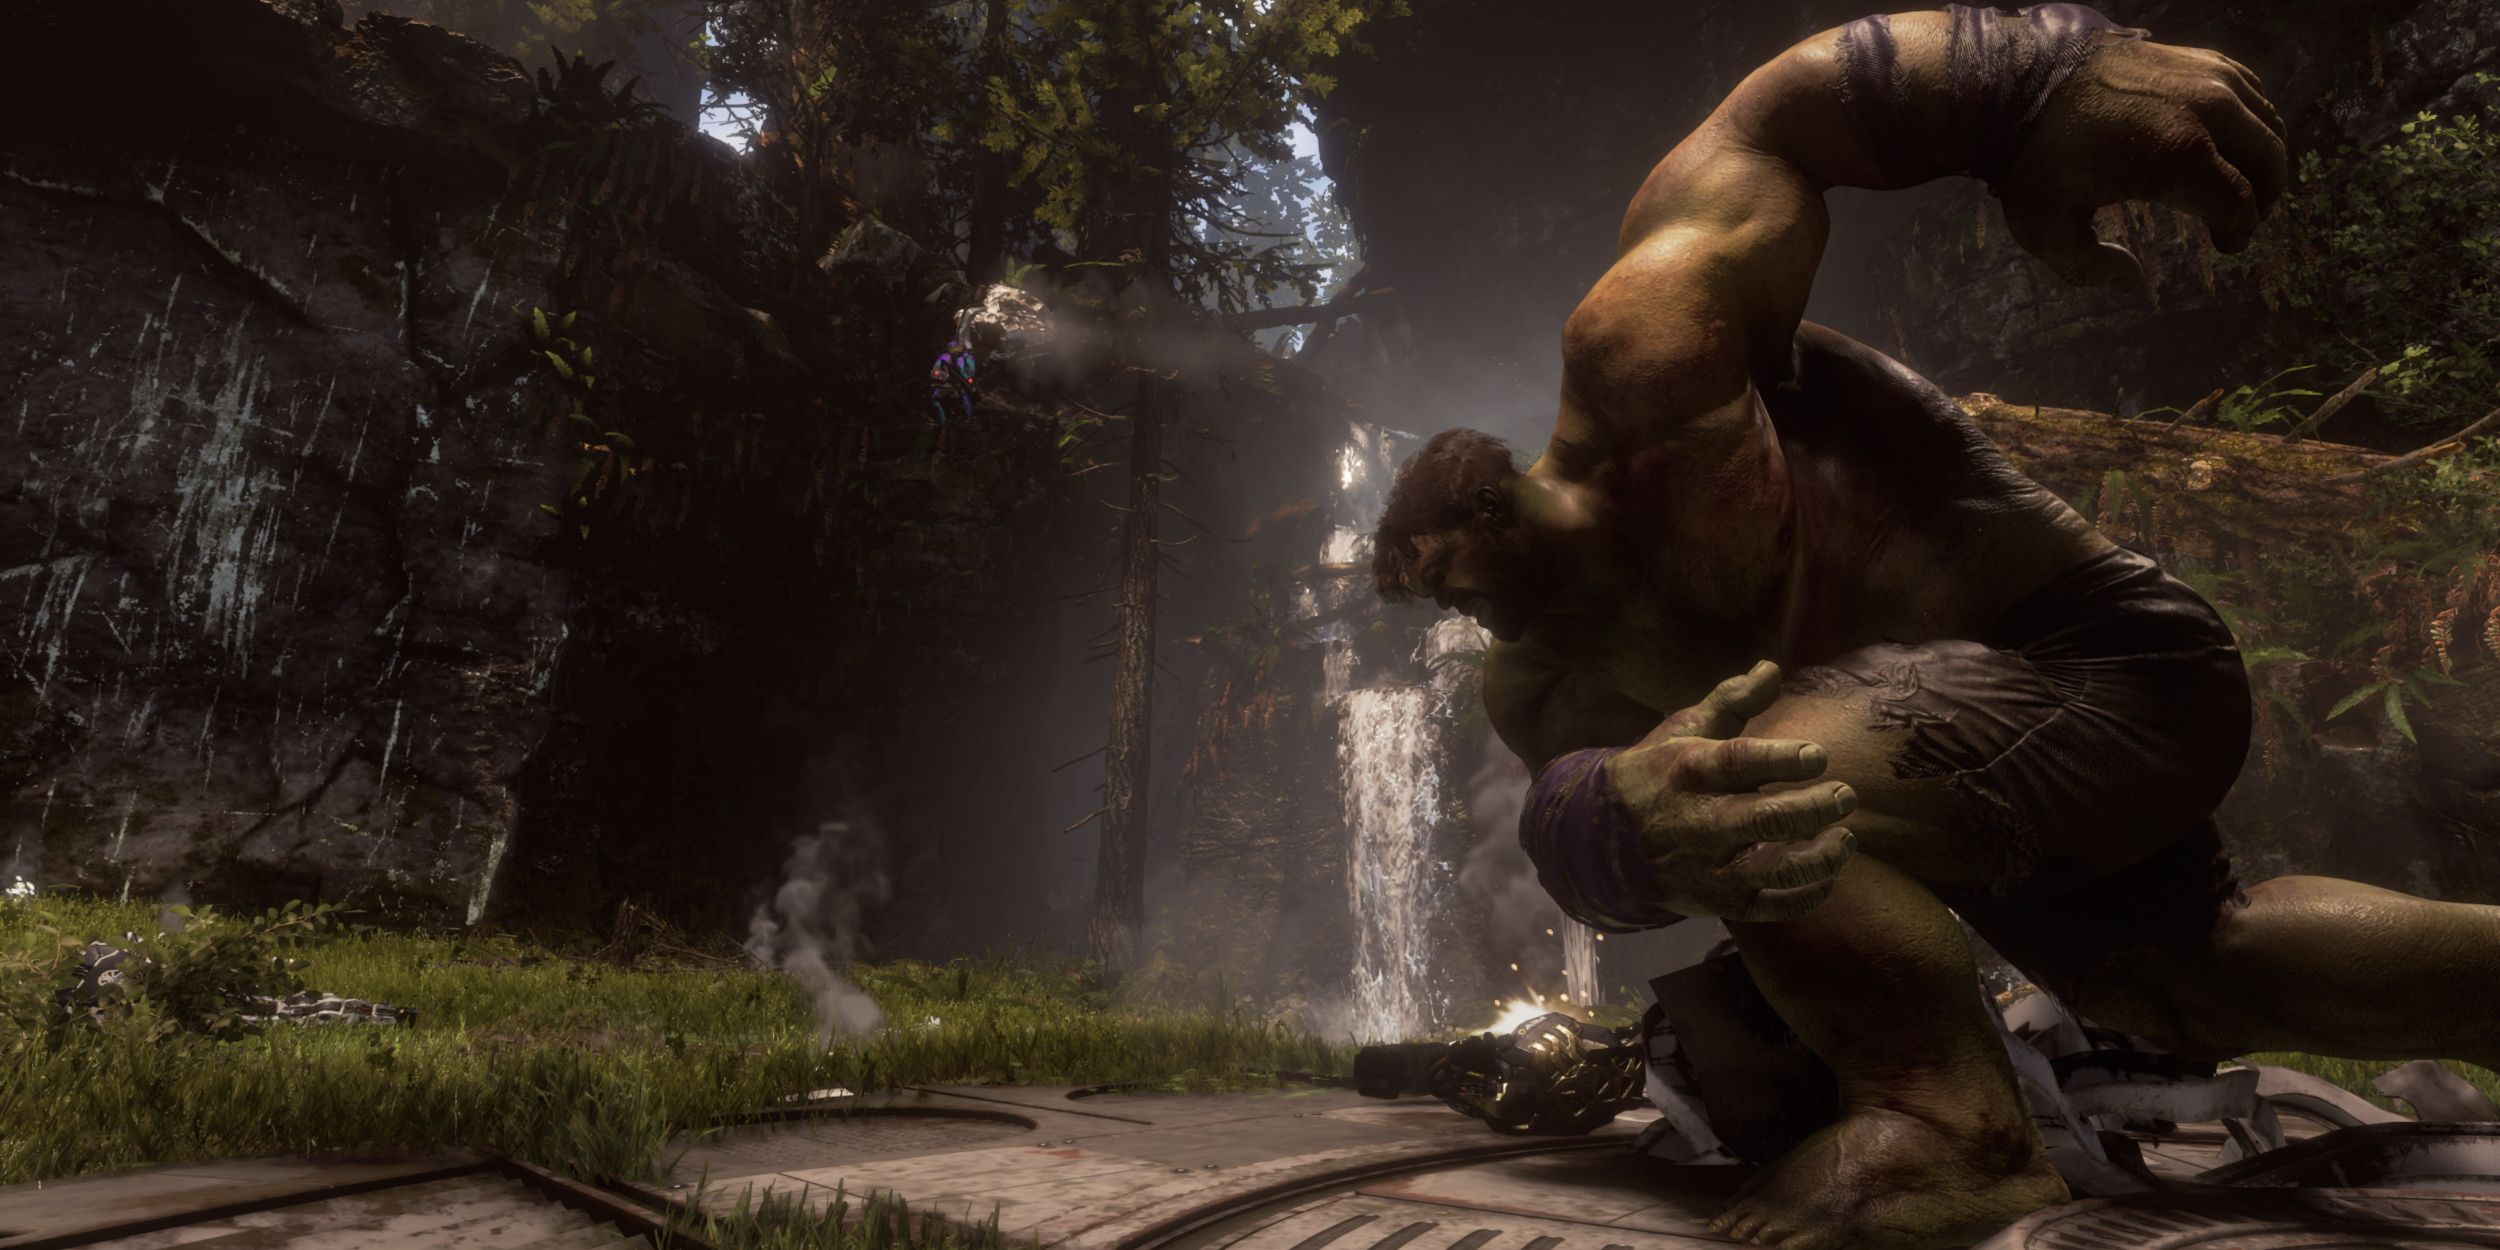 Hulk throws a massive boulder at a robot enemy